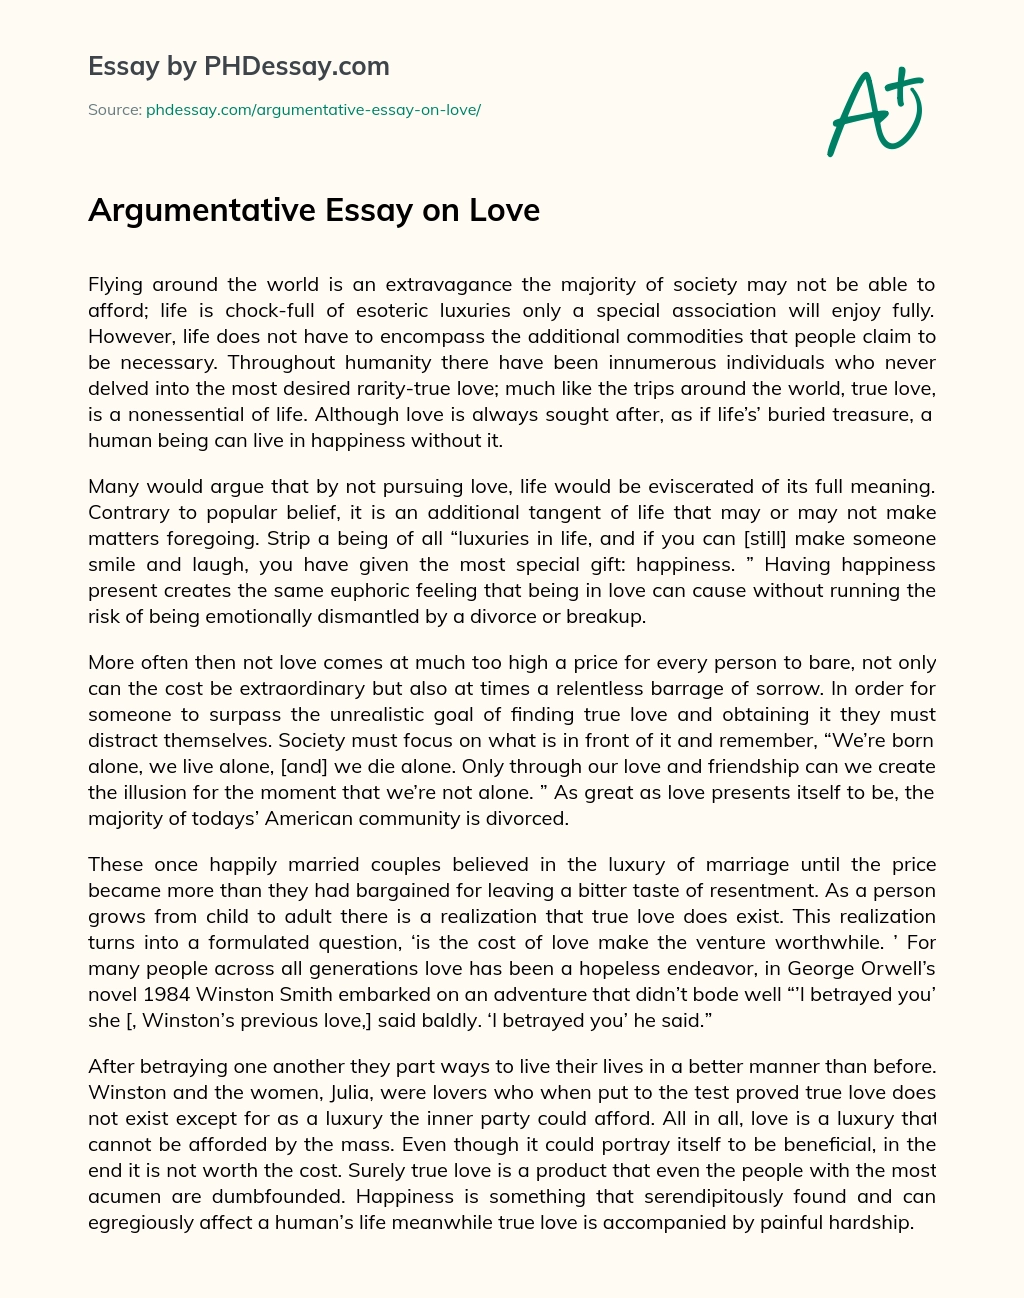 Argumentative Essay on Love essay